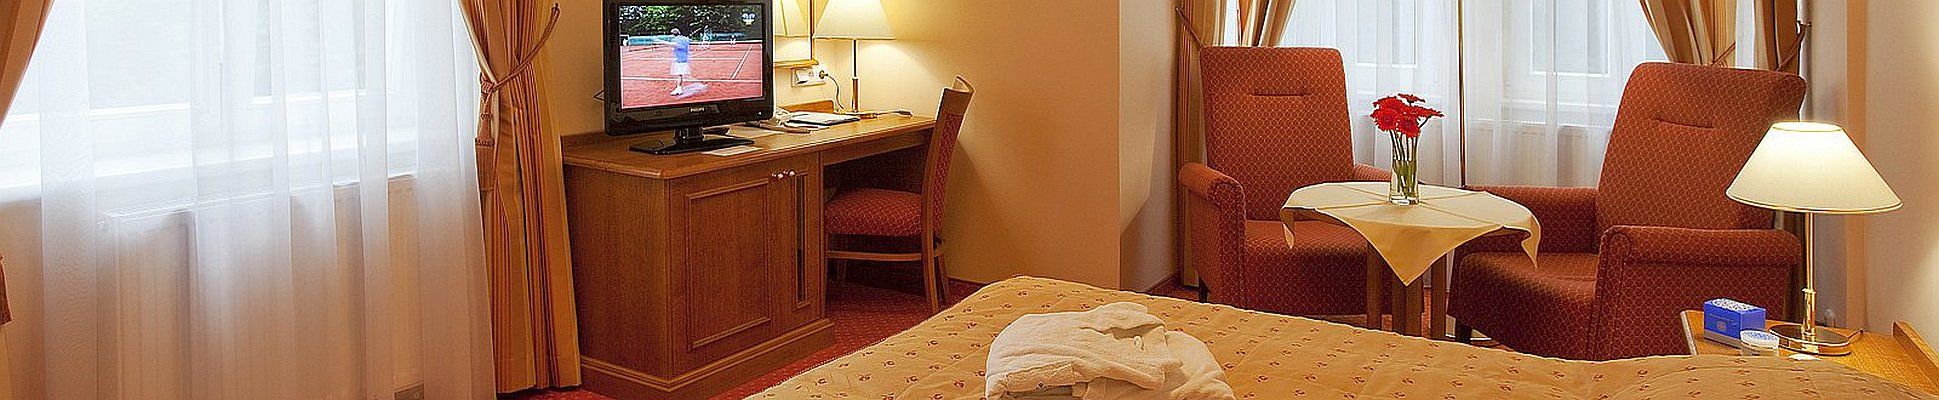 Vltava Ensana Health Spa Hotel - Zimmerbeispiel